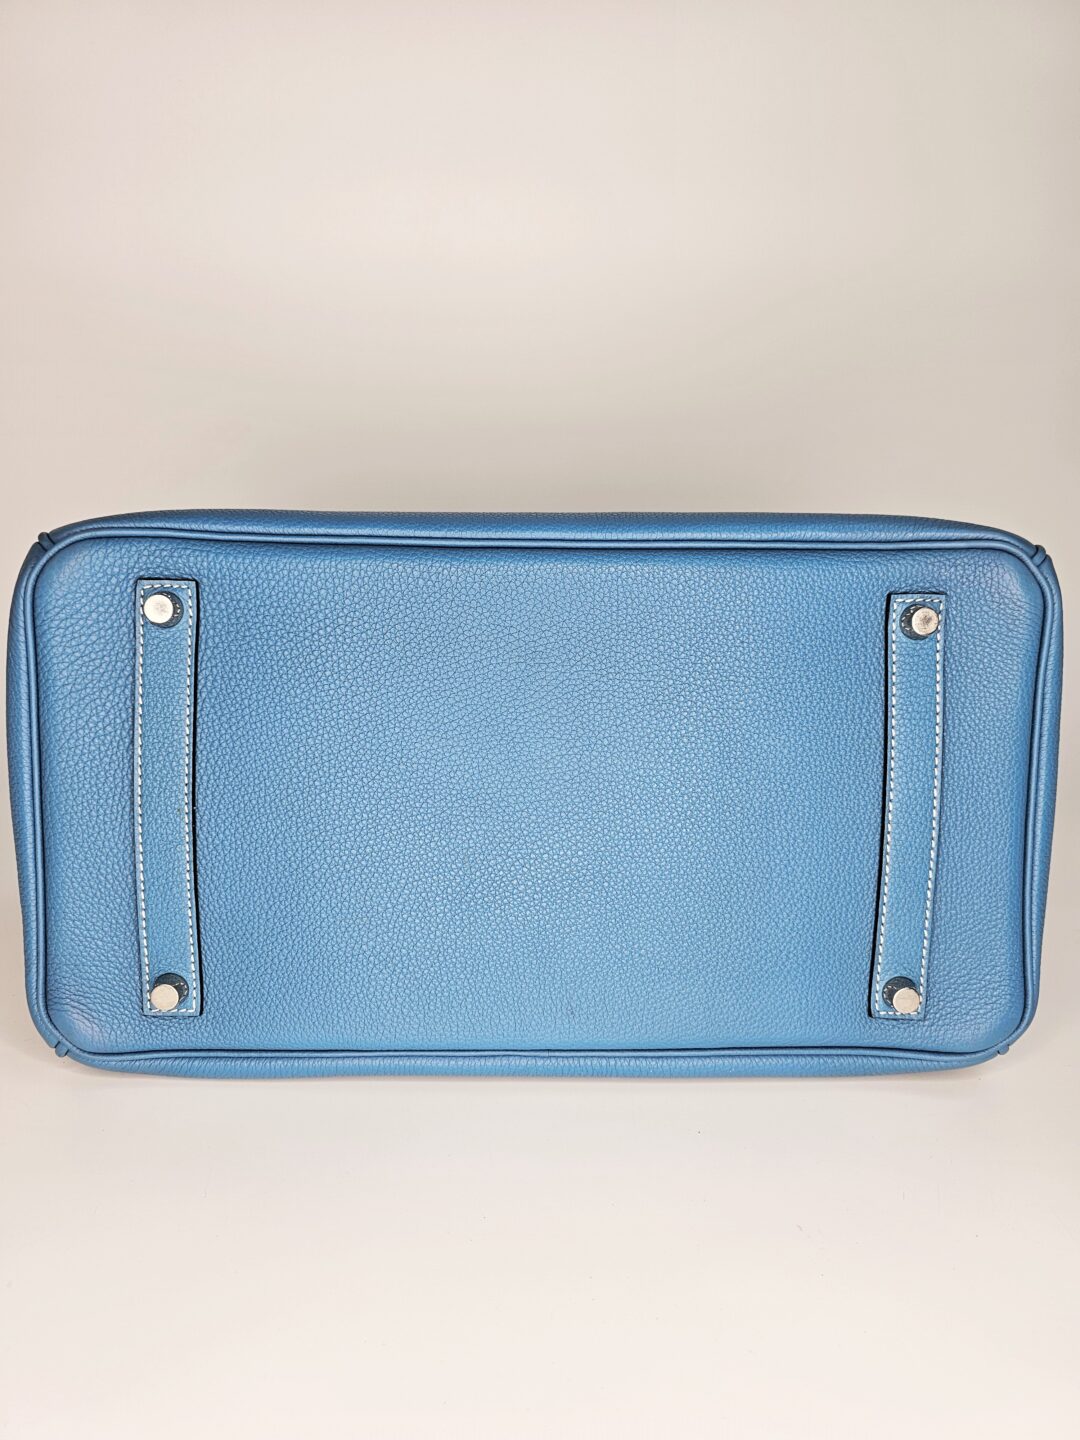 Hermès Blue Jean Togo Birkin 35 Palladium Hardware, 2010 — Shreve